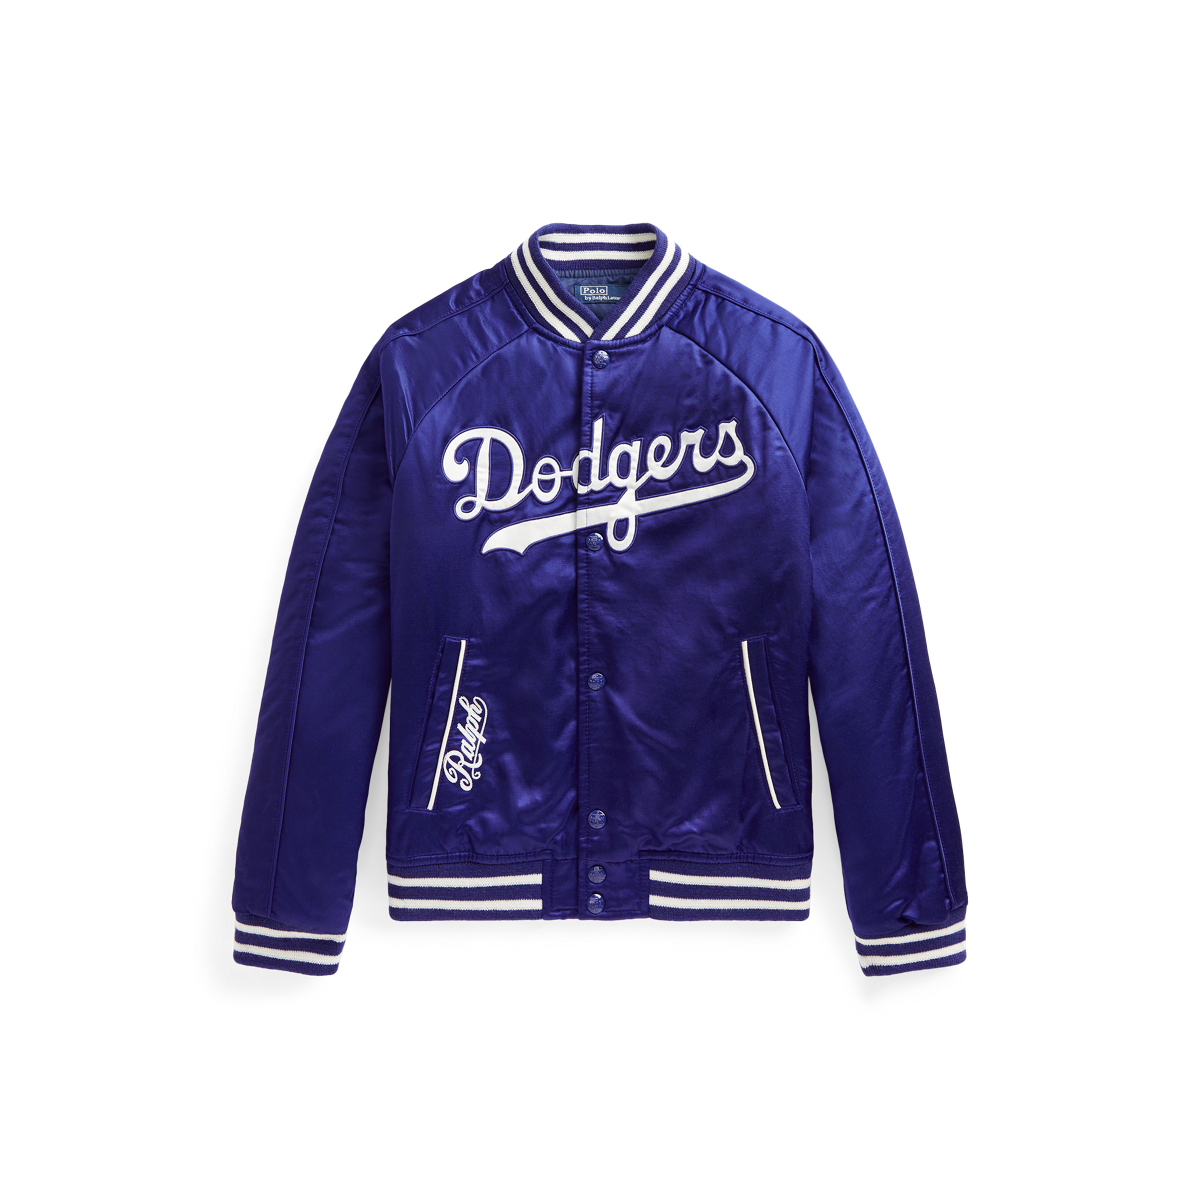 Polo Ralph Lauren Kid's Dodgers Jacket Blue - SS23 Hombre - US